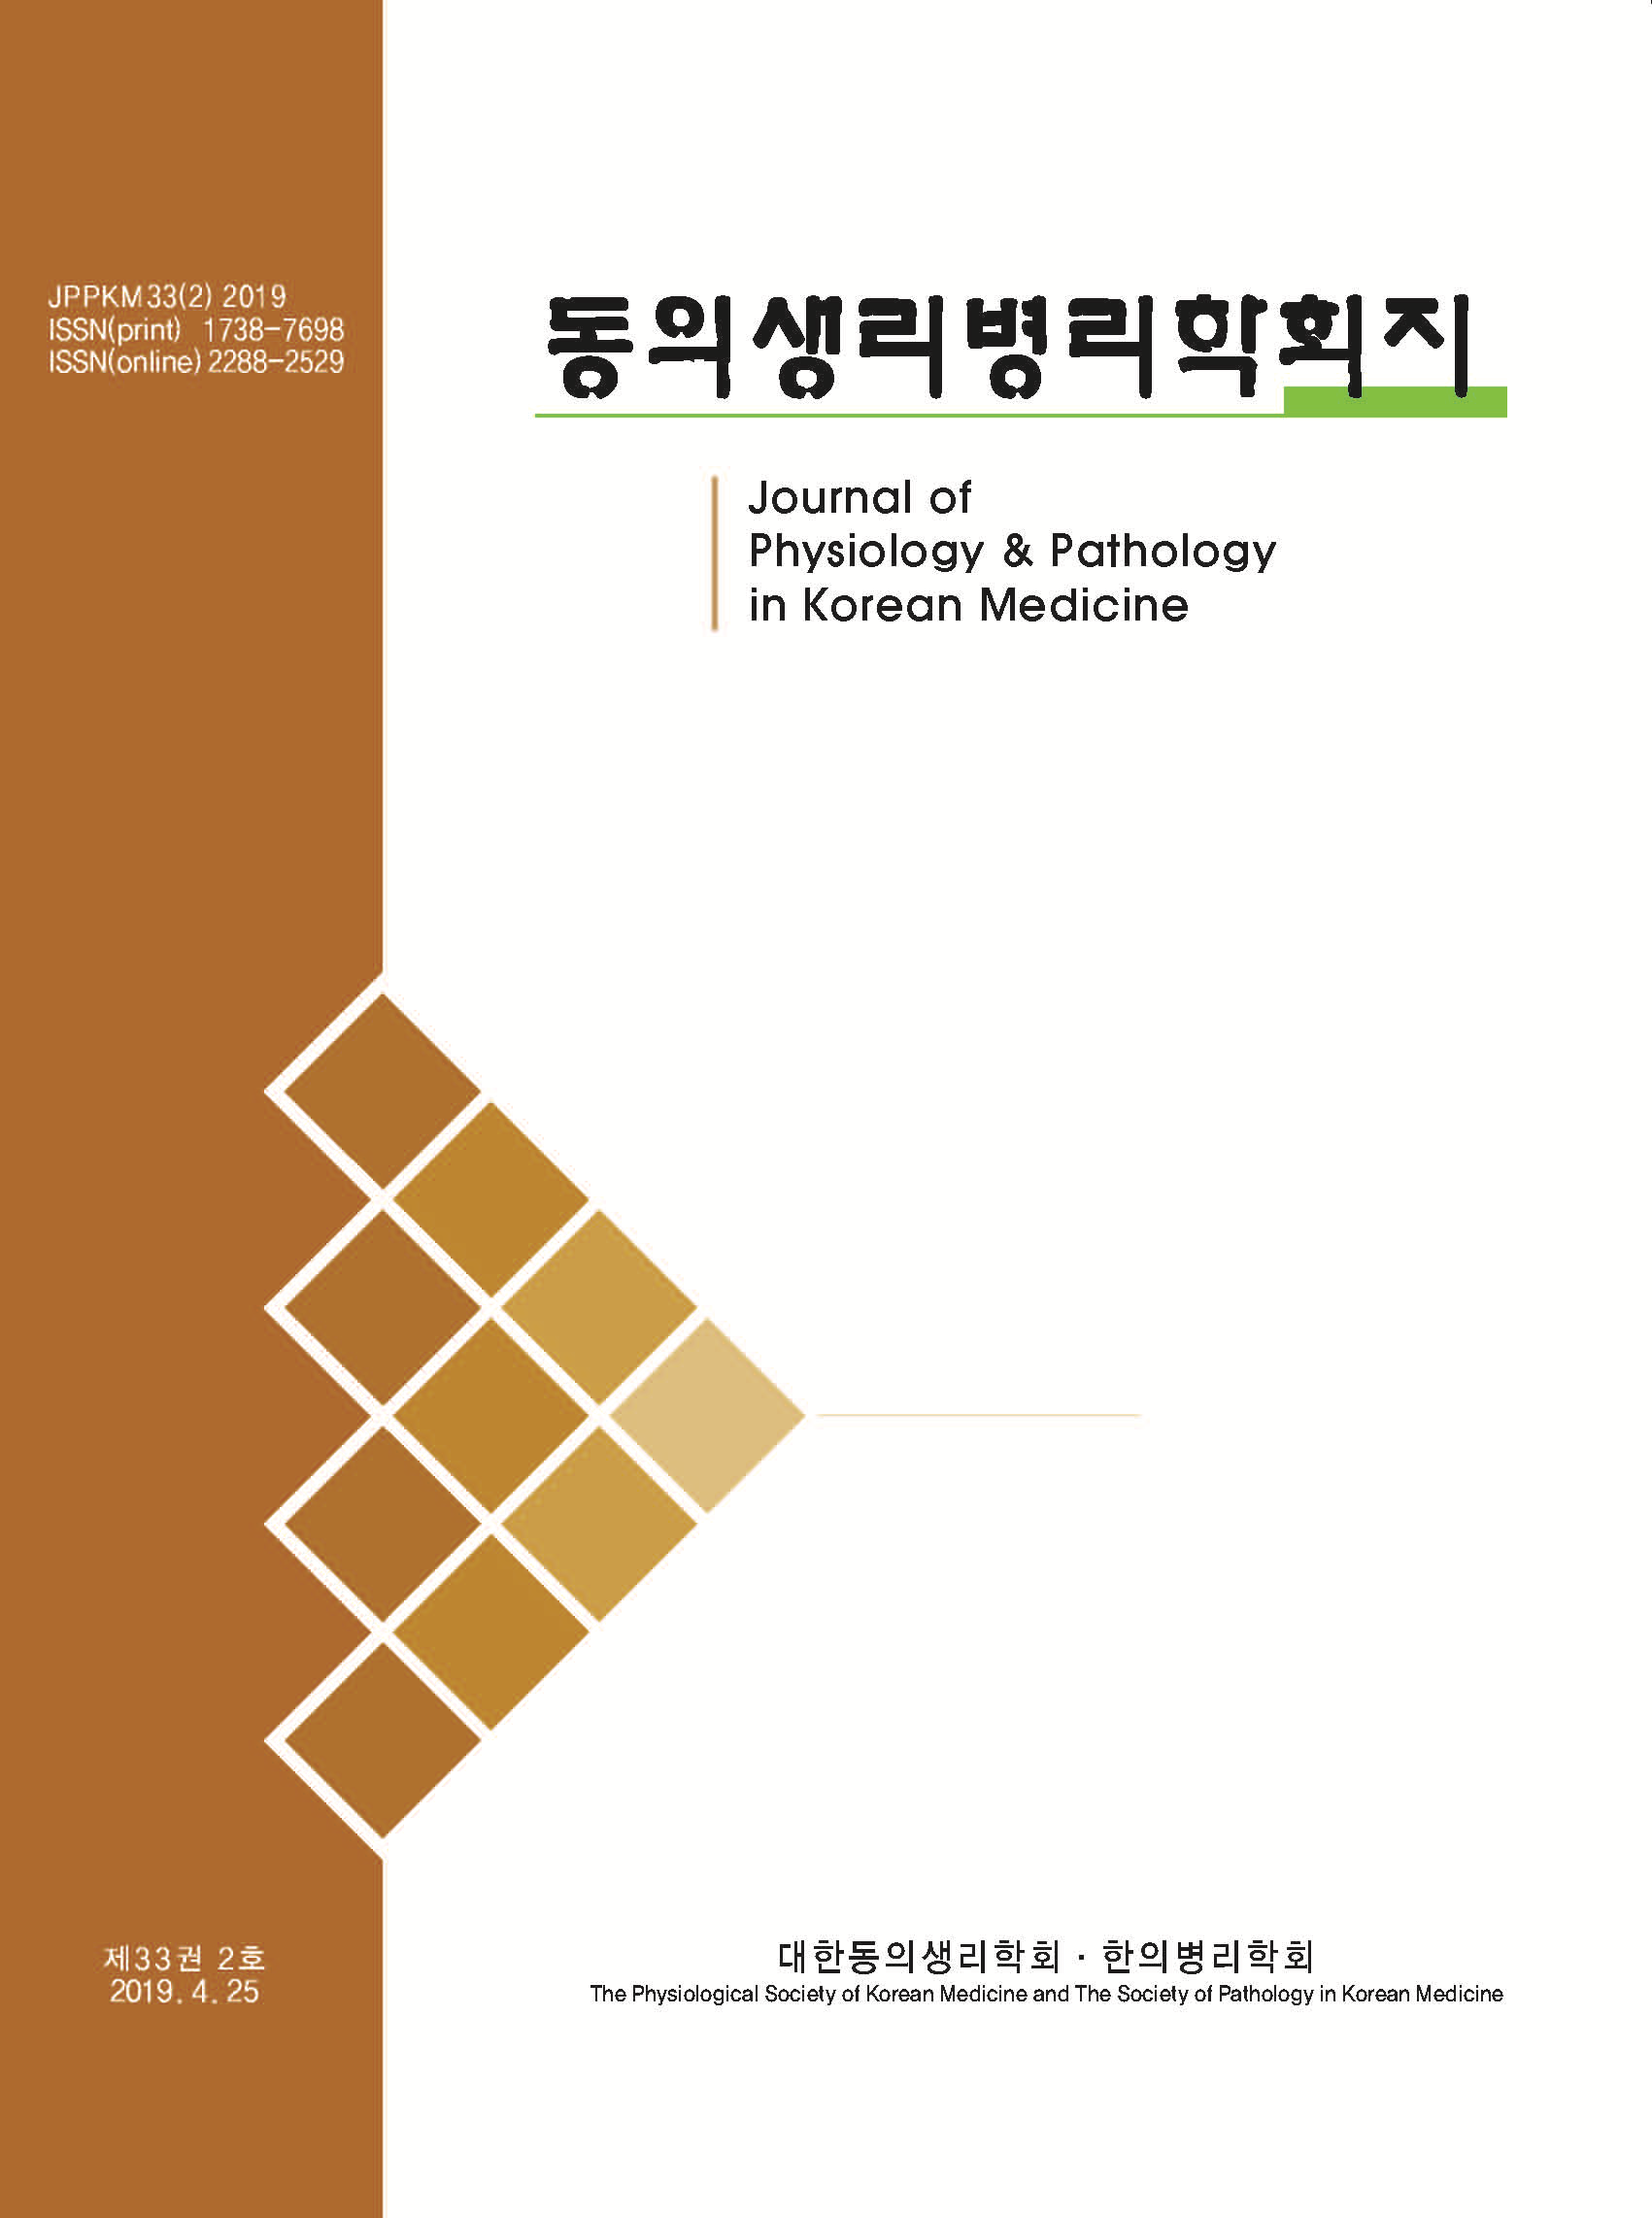 Journal of Physiology & Pathology in Korean Medicine